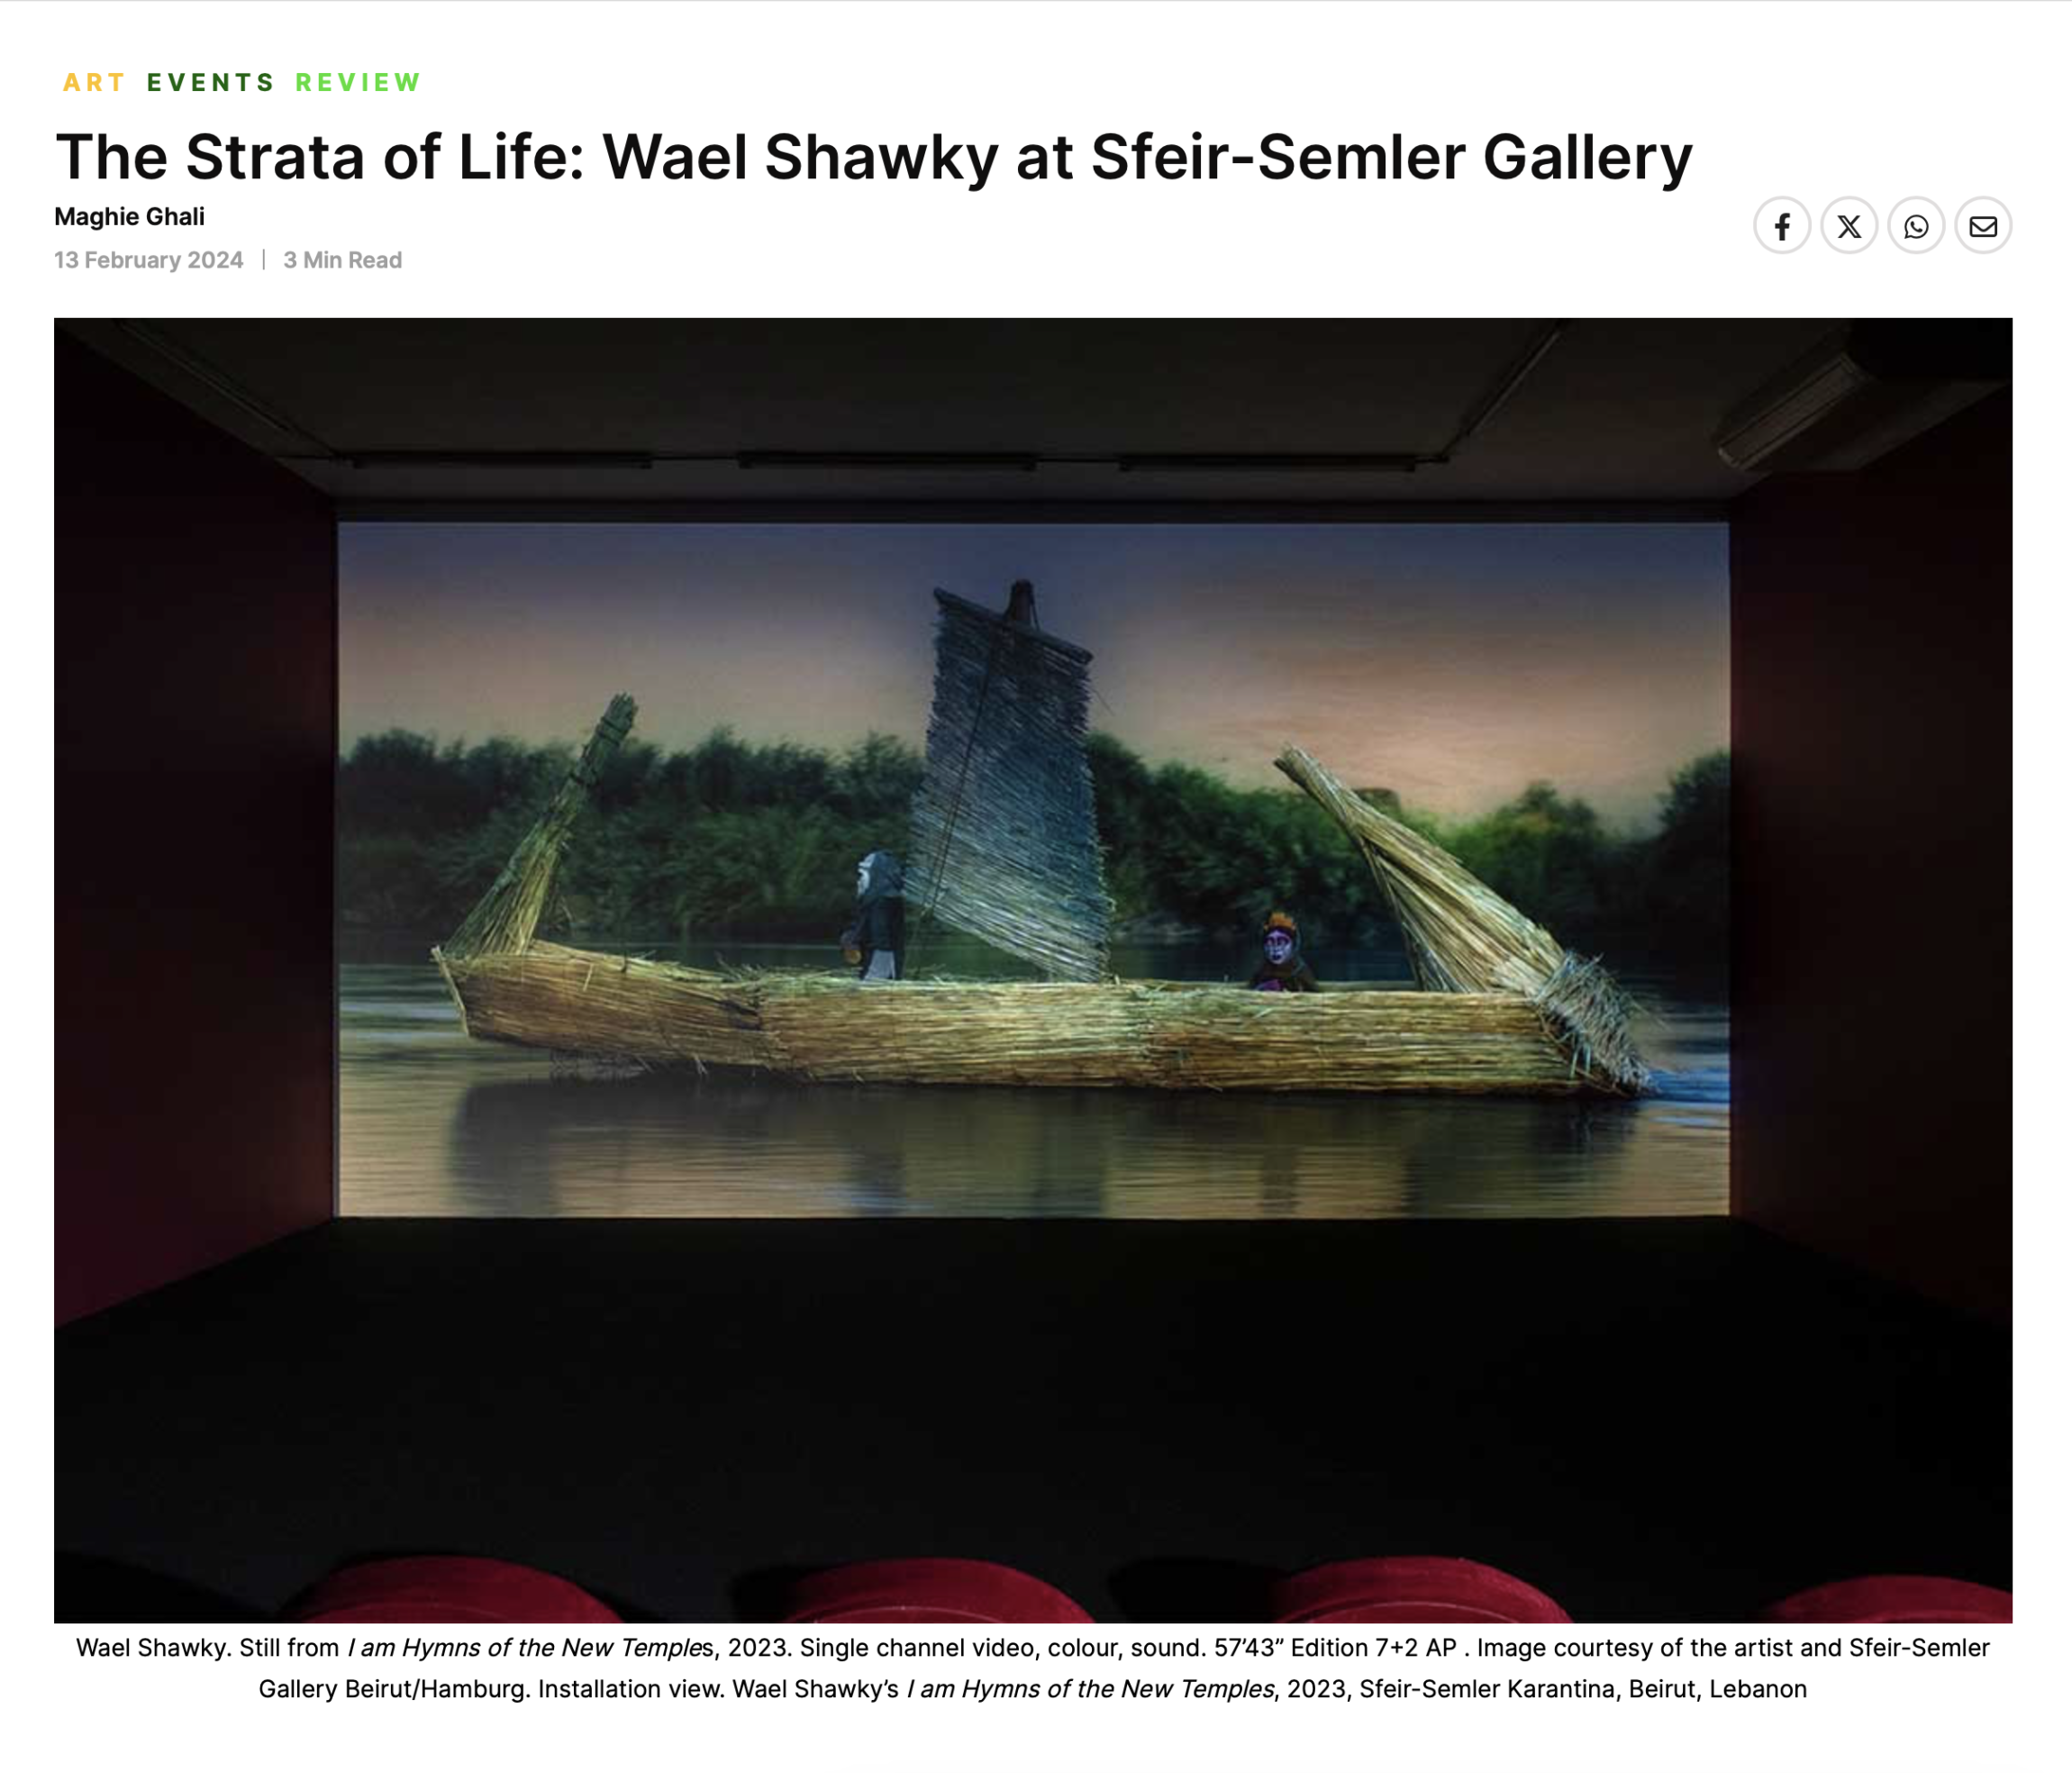 Wael Shawky « The Strata of Life: Wael Shawky at Sfeir-Semler Gallery » | via canvas, February 13, 2024